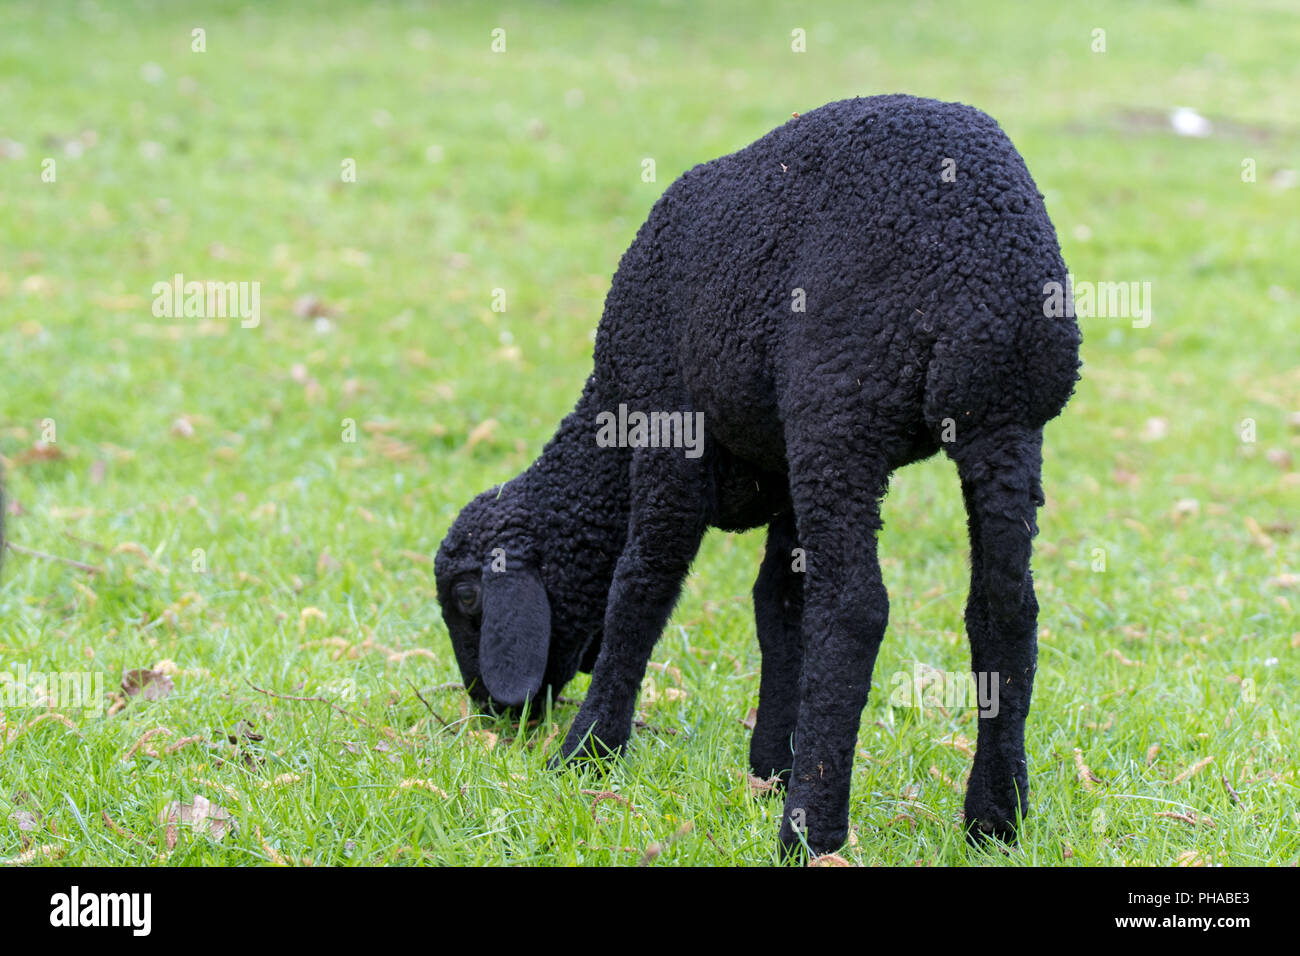 Karakulsheep lamb Stock Photo